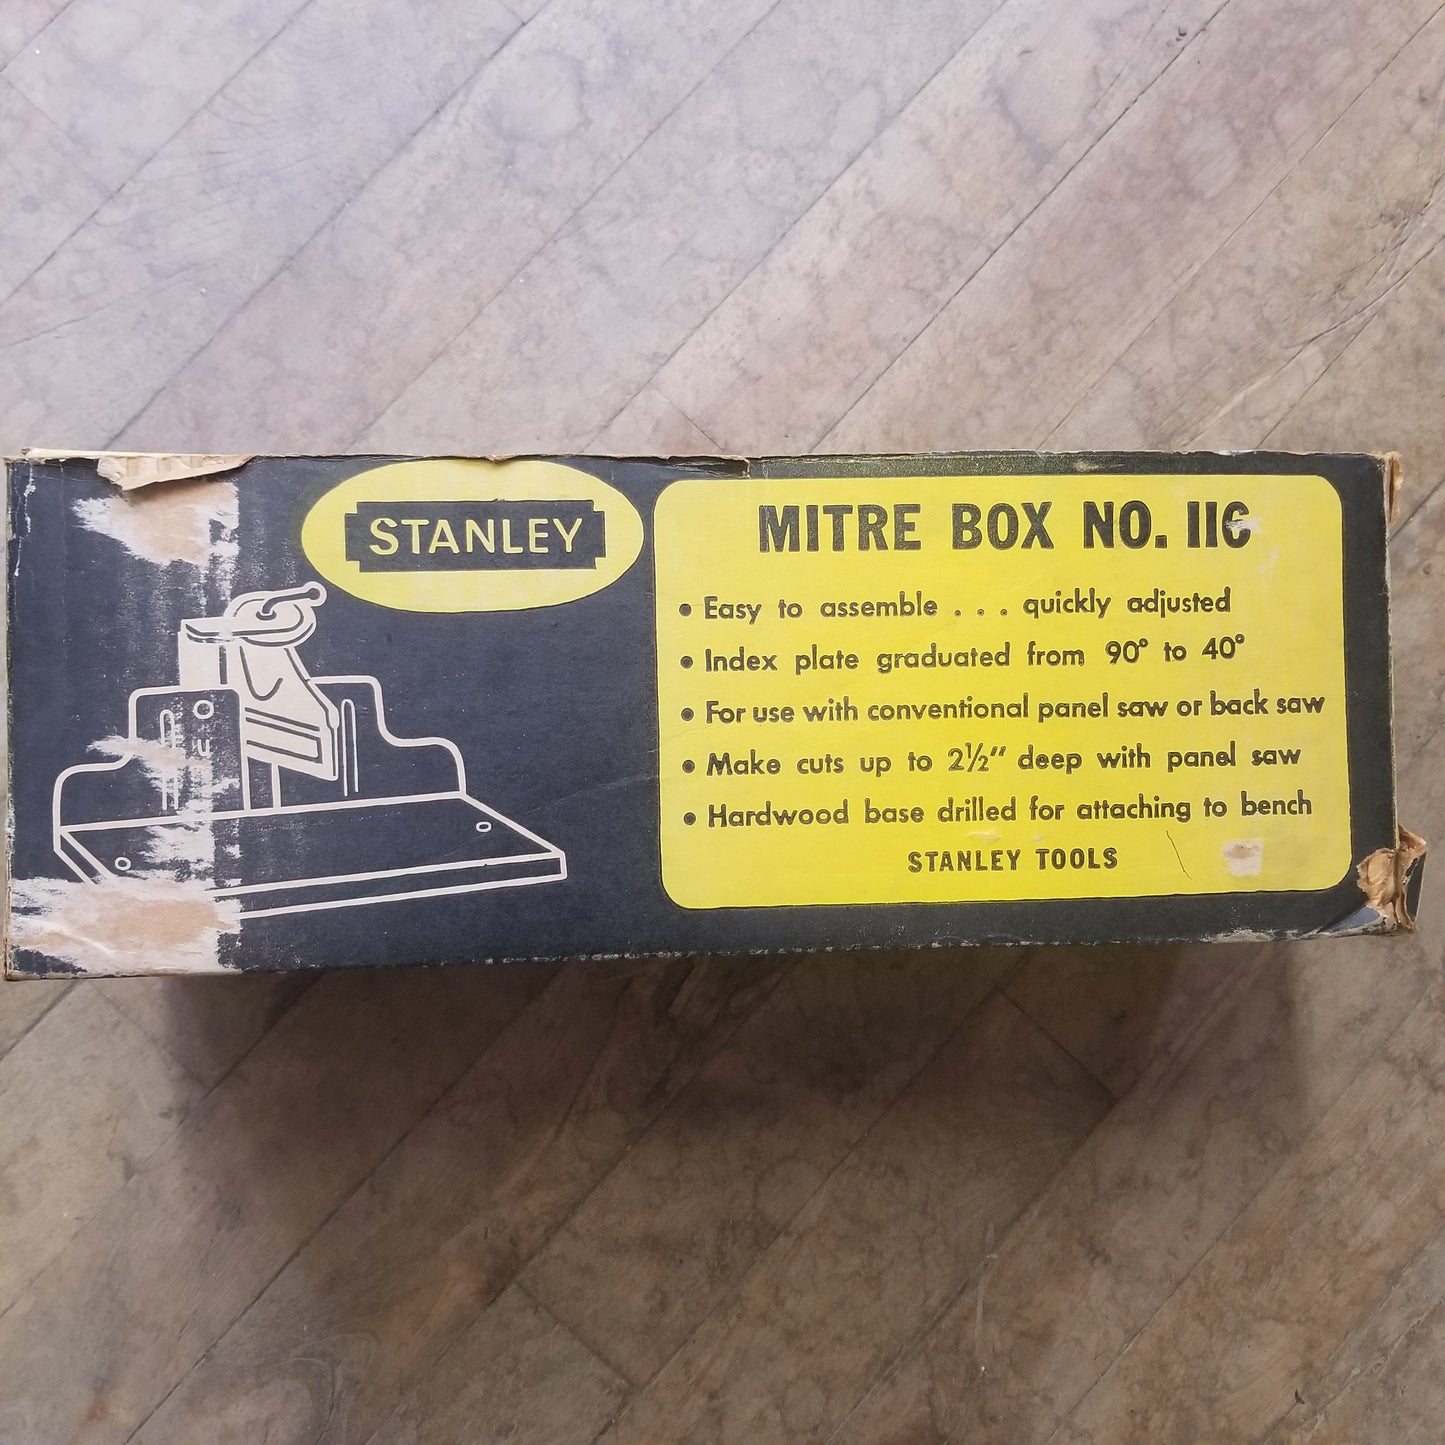 Stanley Mitre Box No. 116 (116S)